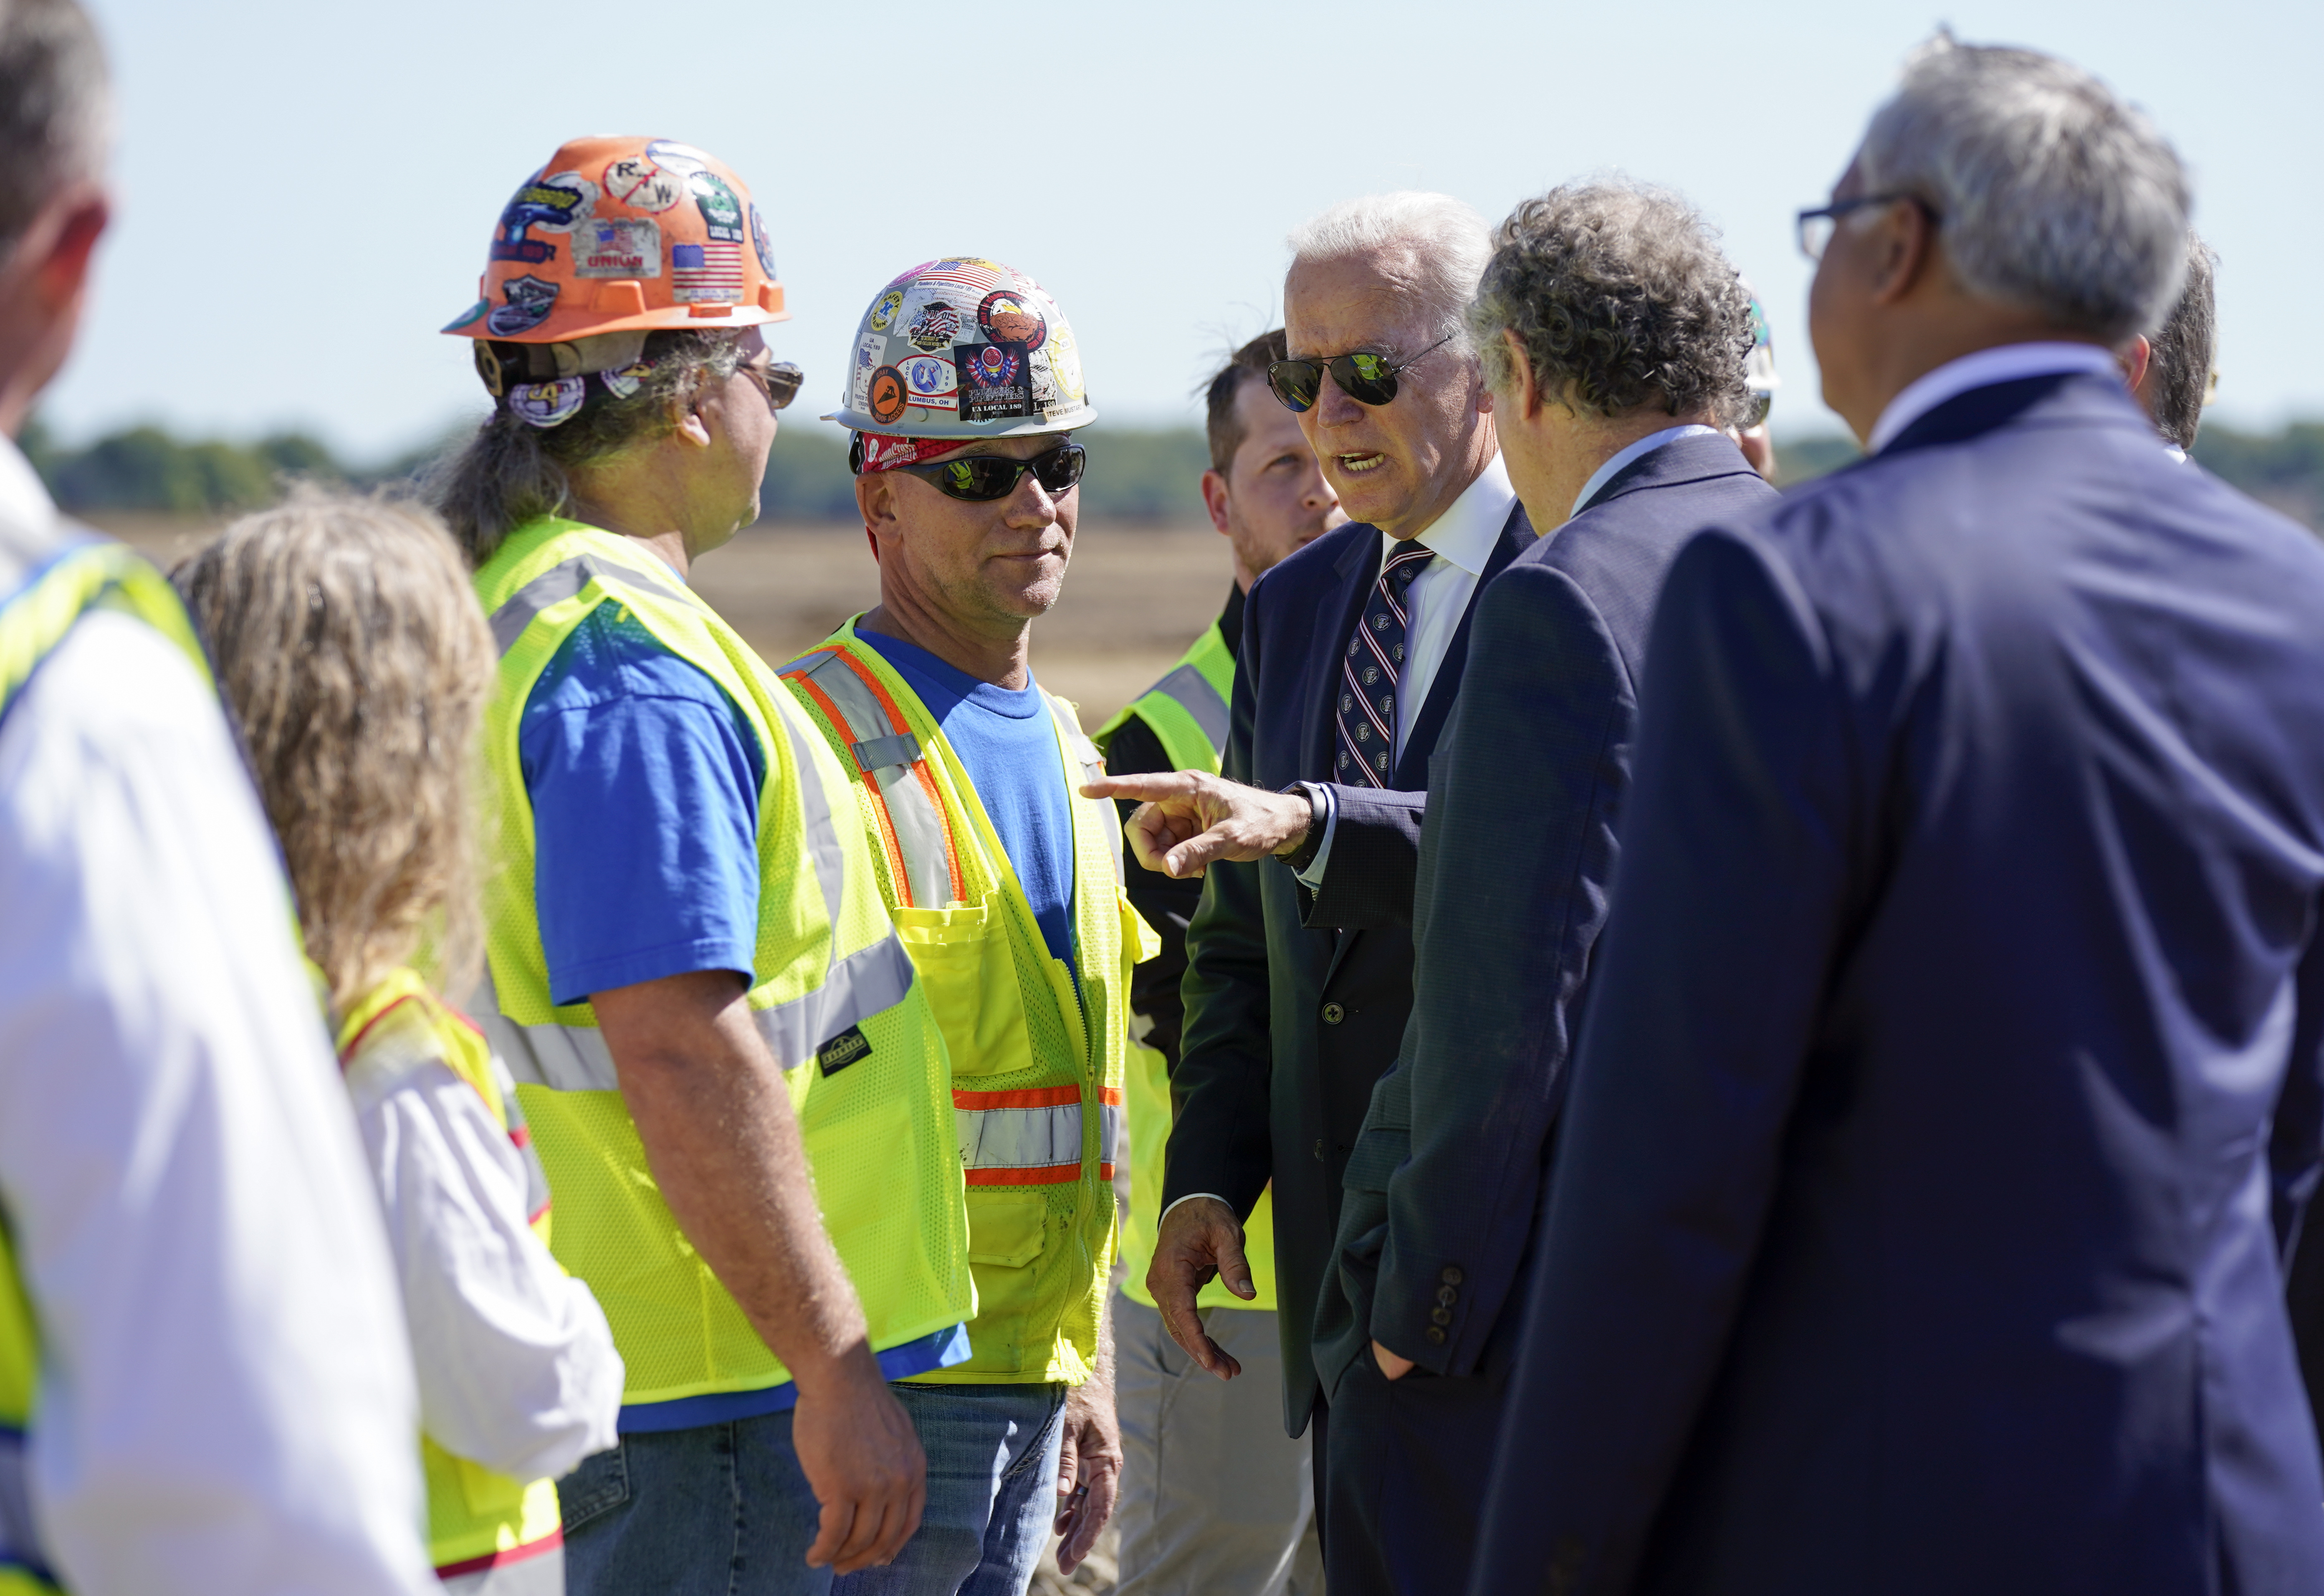 Politics evident as Biden visits future Intel plant